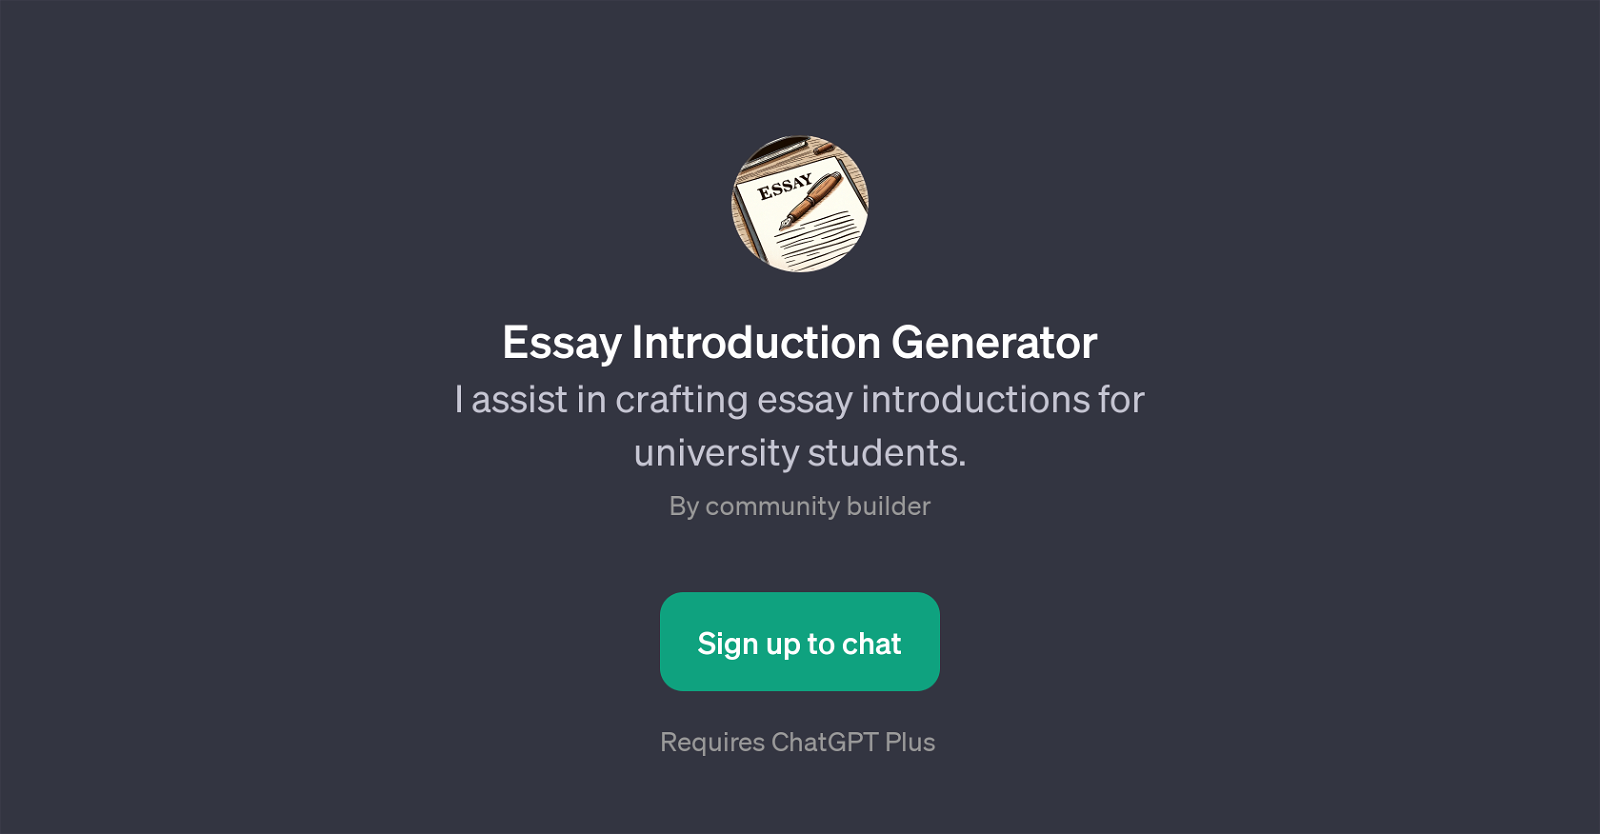 Essay Introduction Generator website